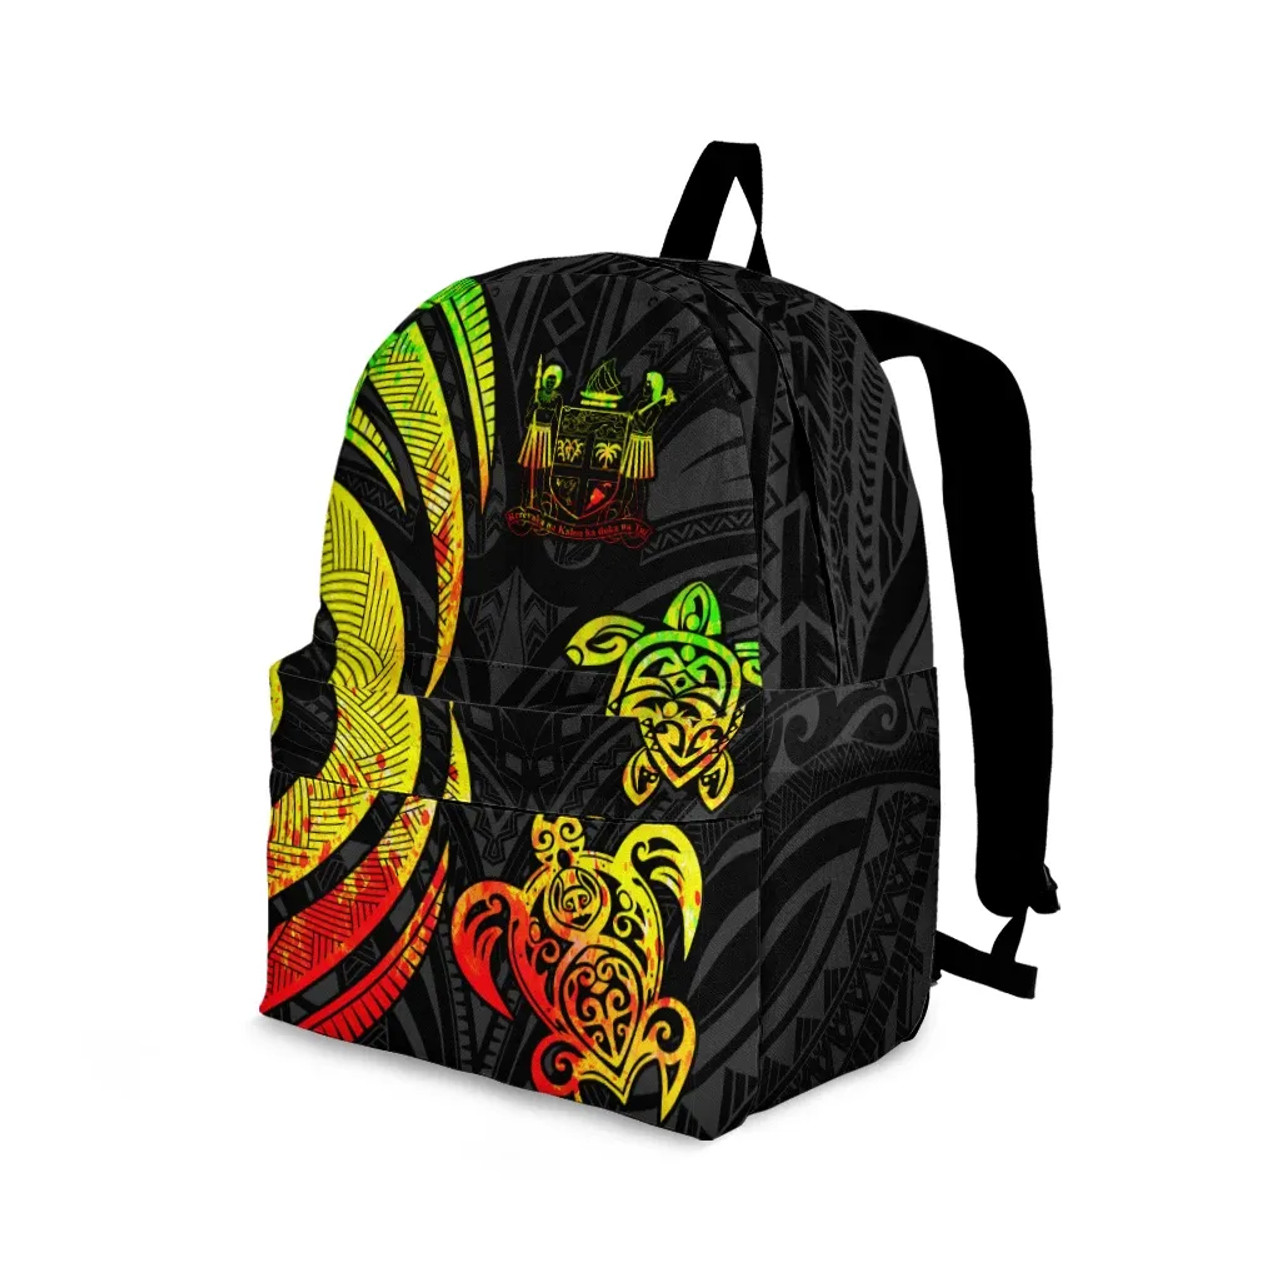 Fiji Backpack - Reggae Tentacle Turtle Crest 2